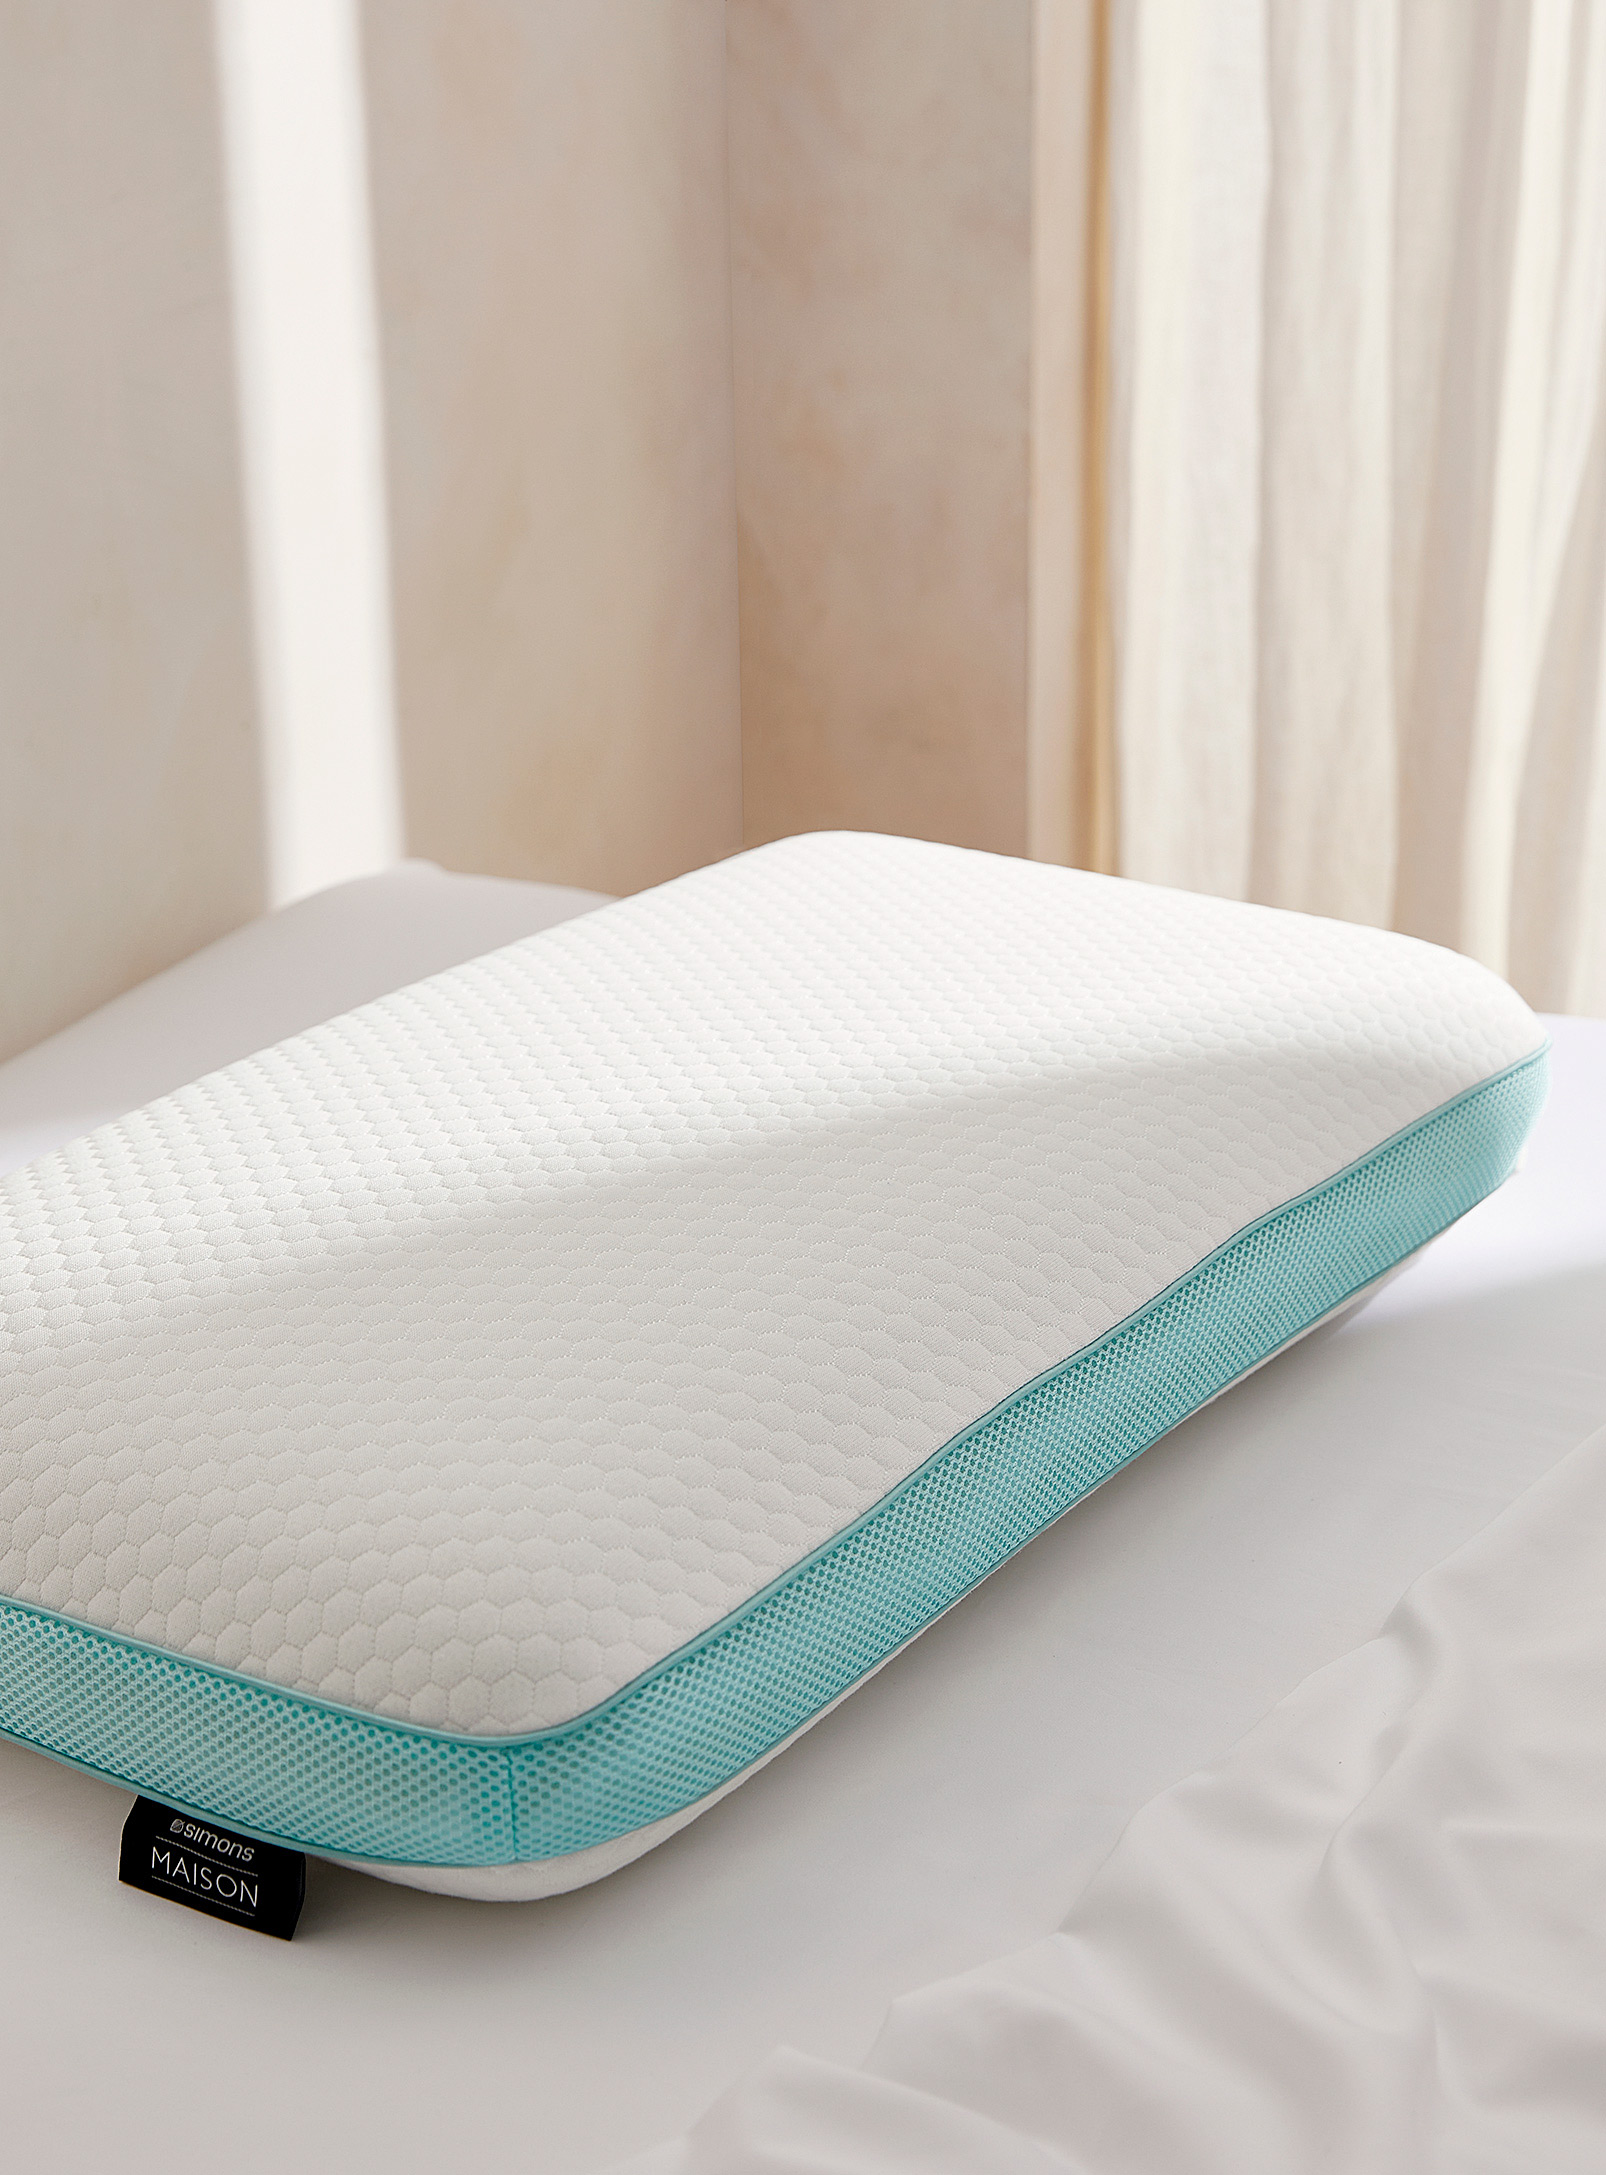 Simons Maison - Pure eucalyptus memory foam pillow Firm support Queen size